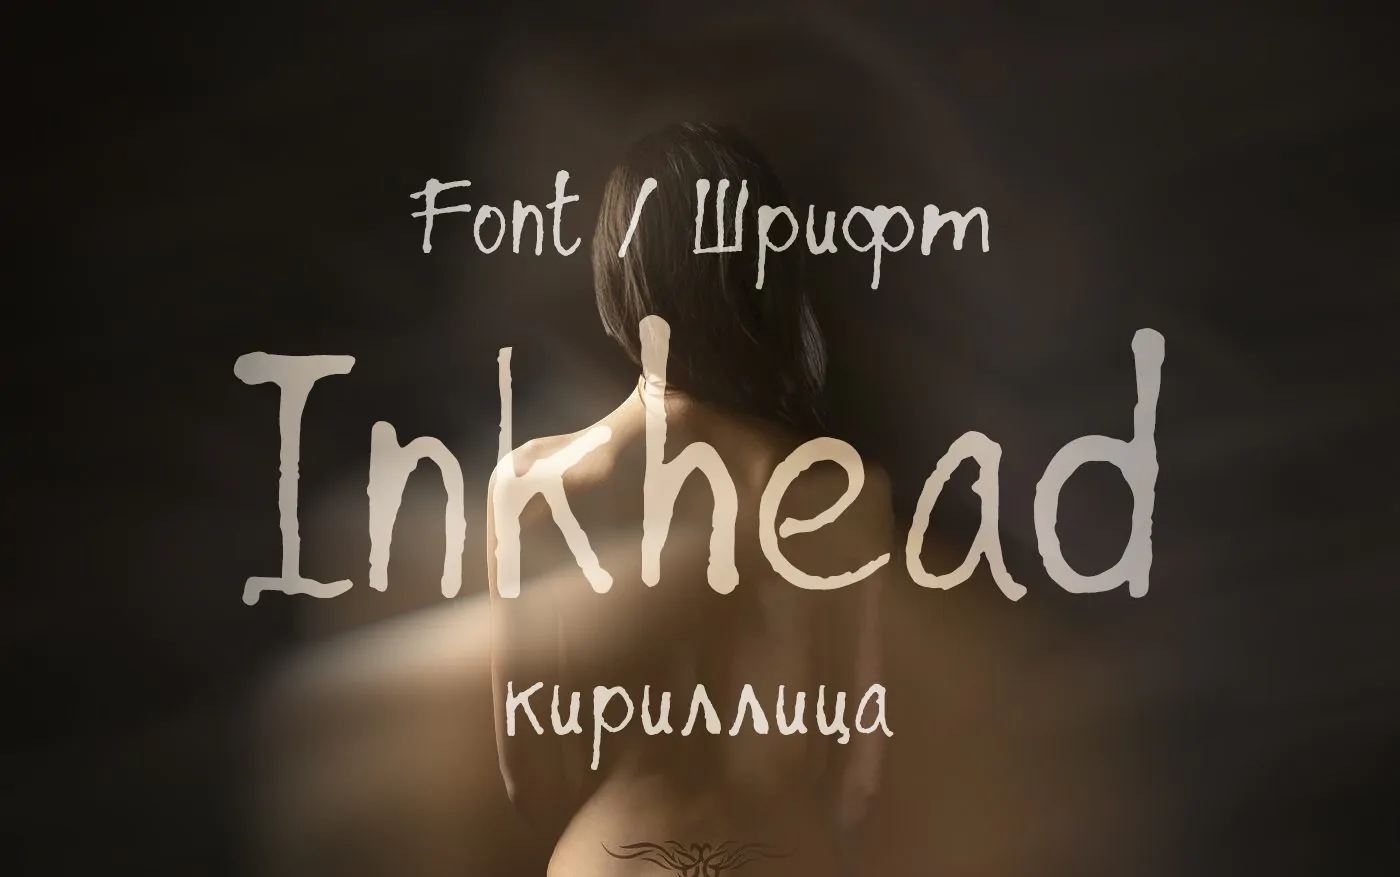 Шрифт Inkhead Cyrillic